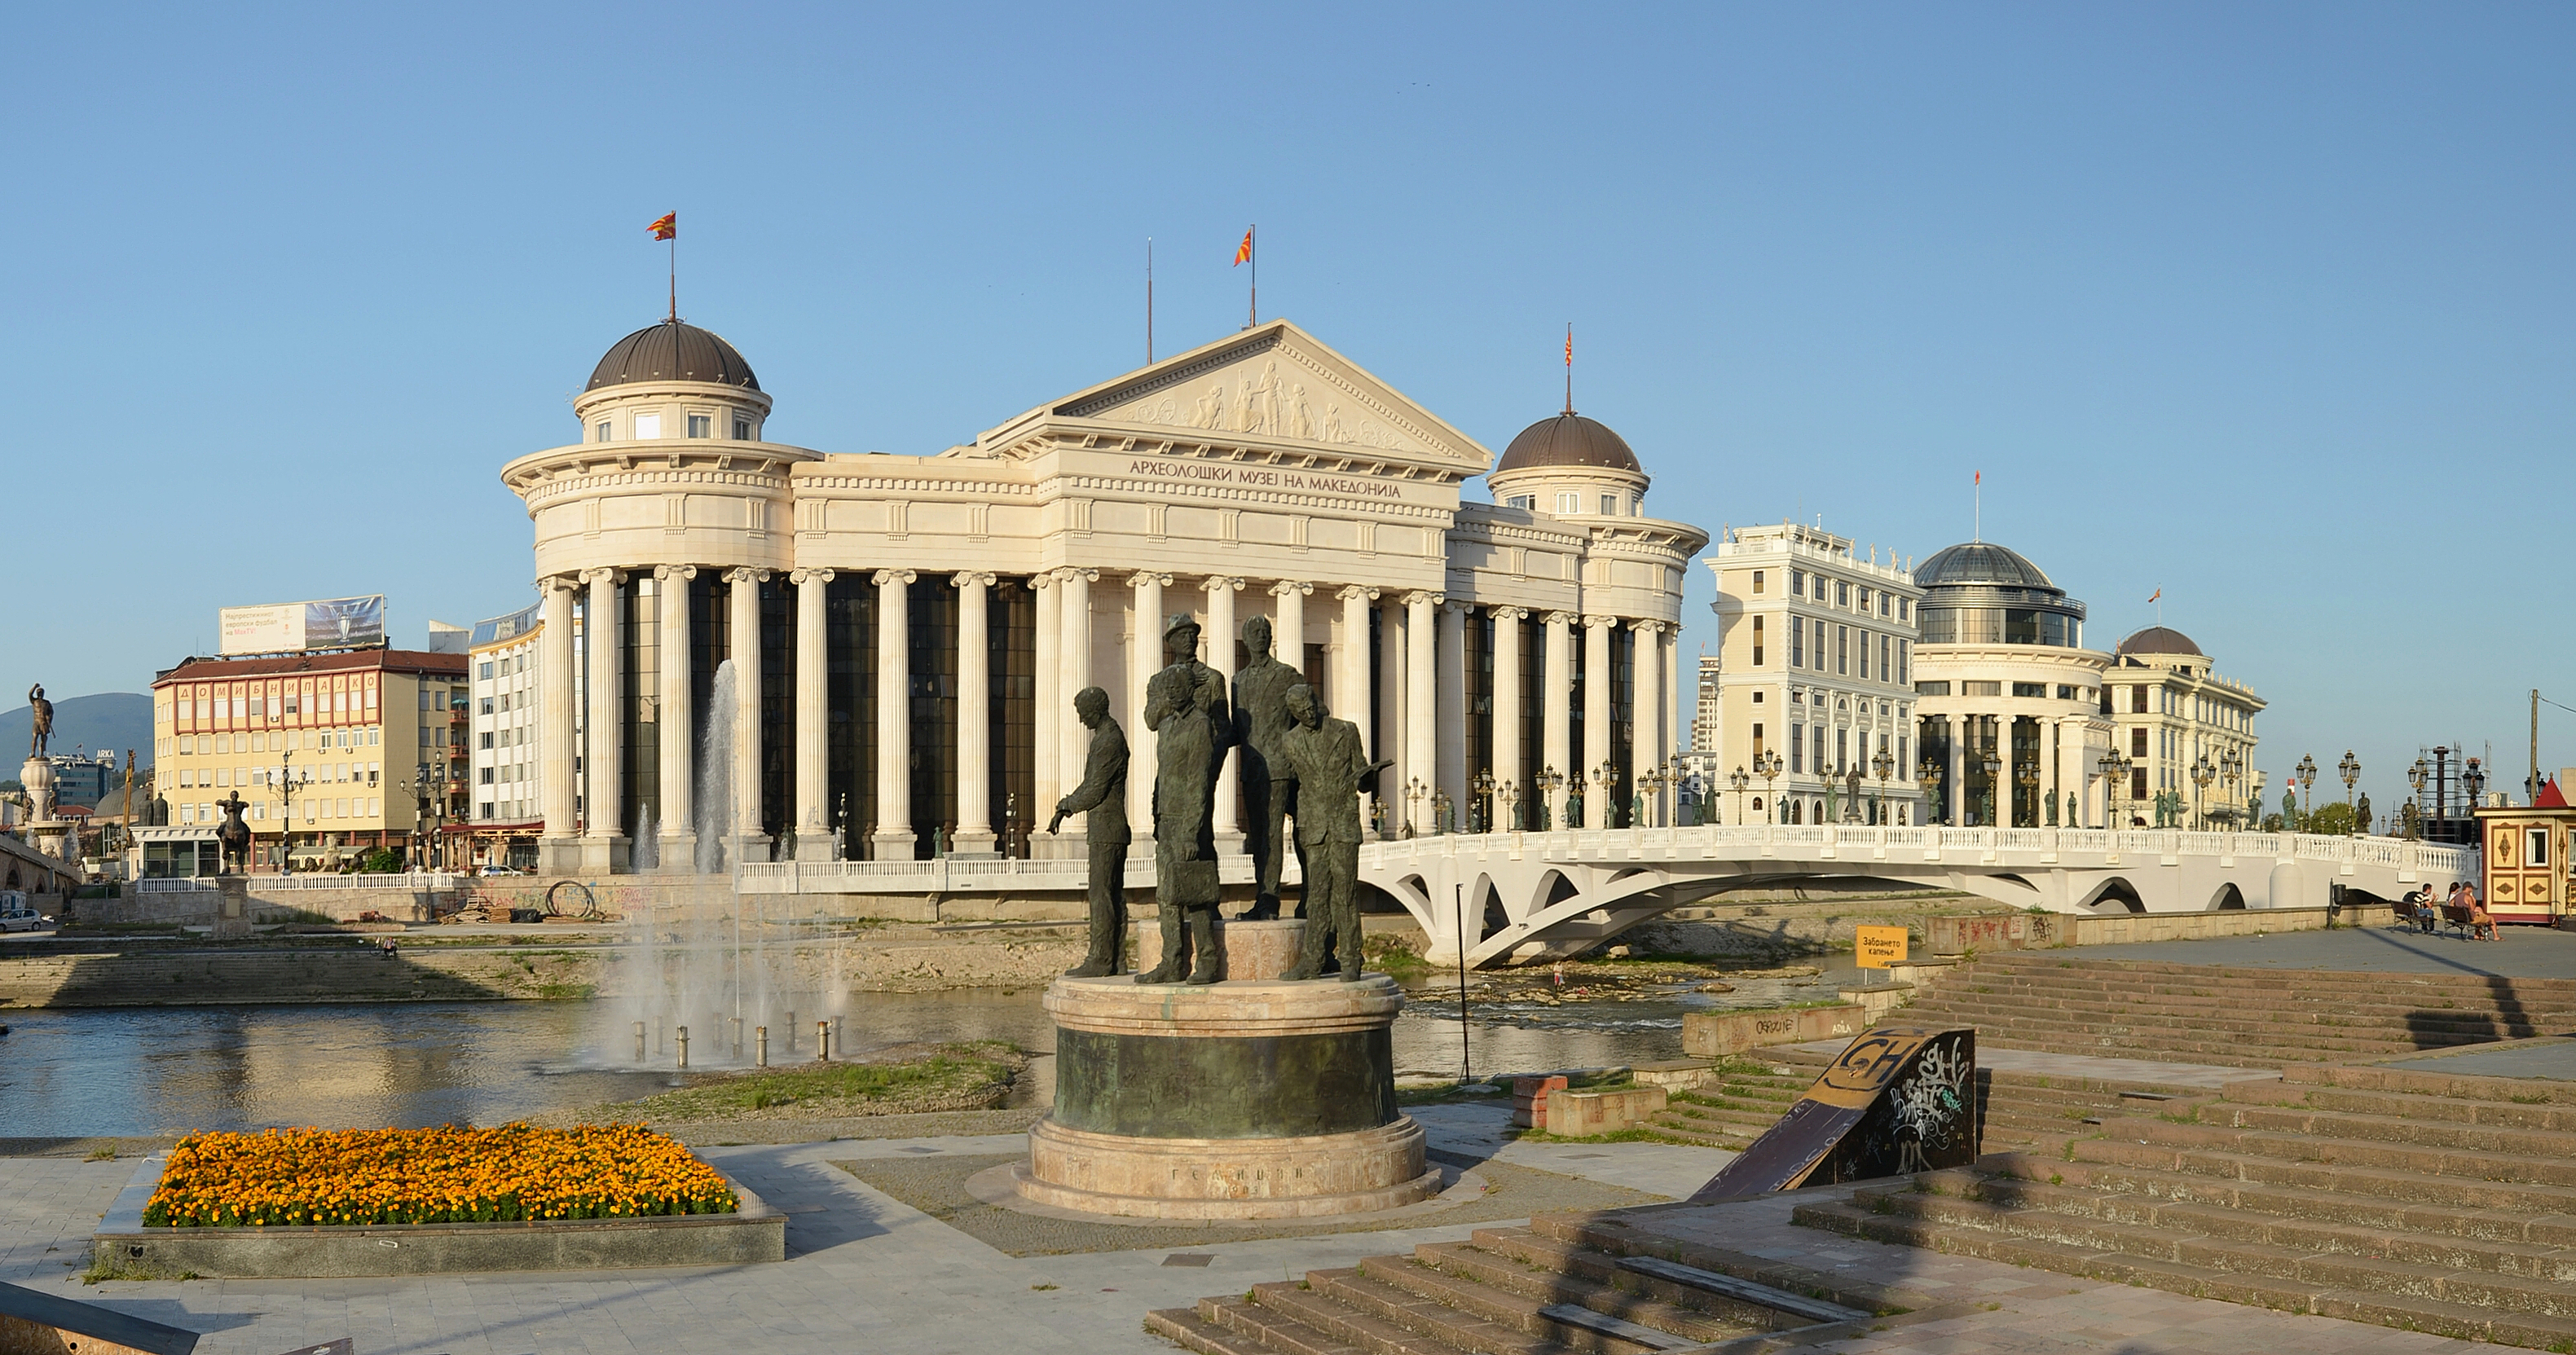 Skopje 2014 - Archeological Museum of Macedonia